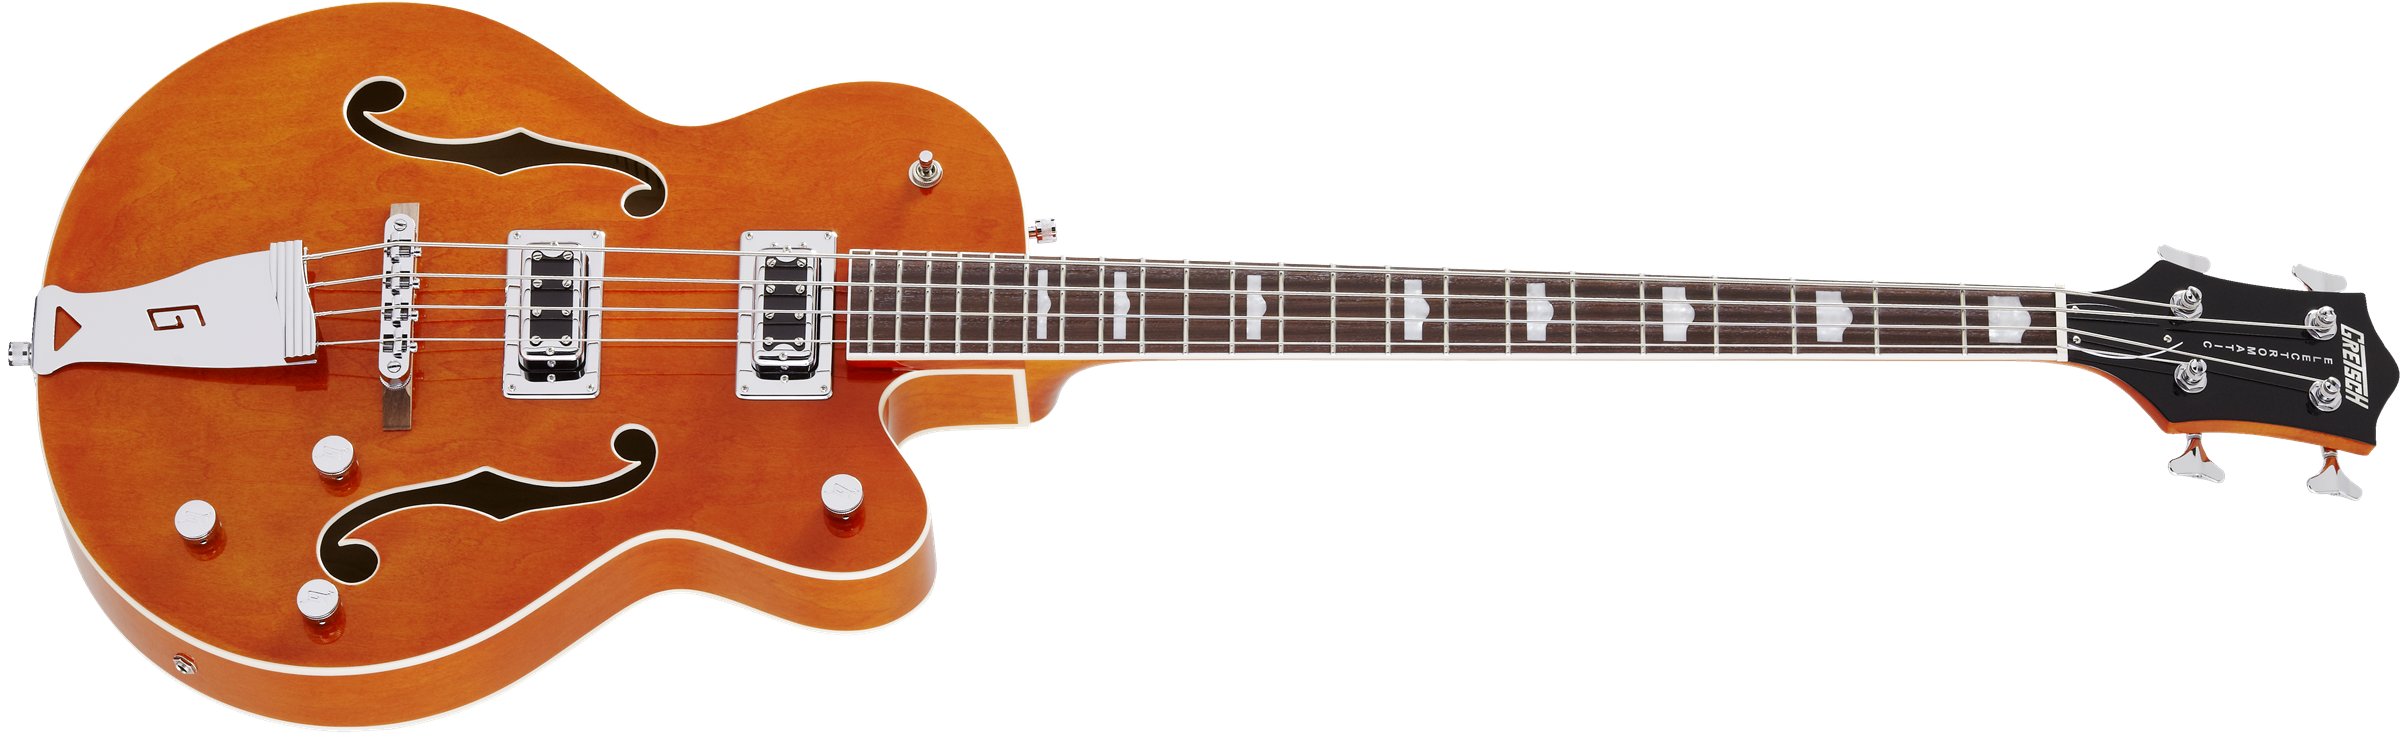 Gretsch G5440ls Long Scale Bass Electromatic Hollow Orange - Orange - Halbakustiche Bass - Variation 1